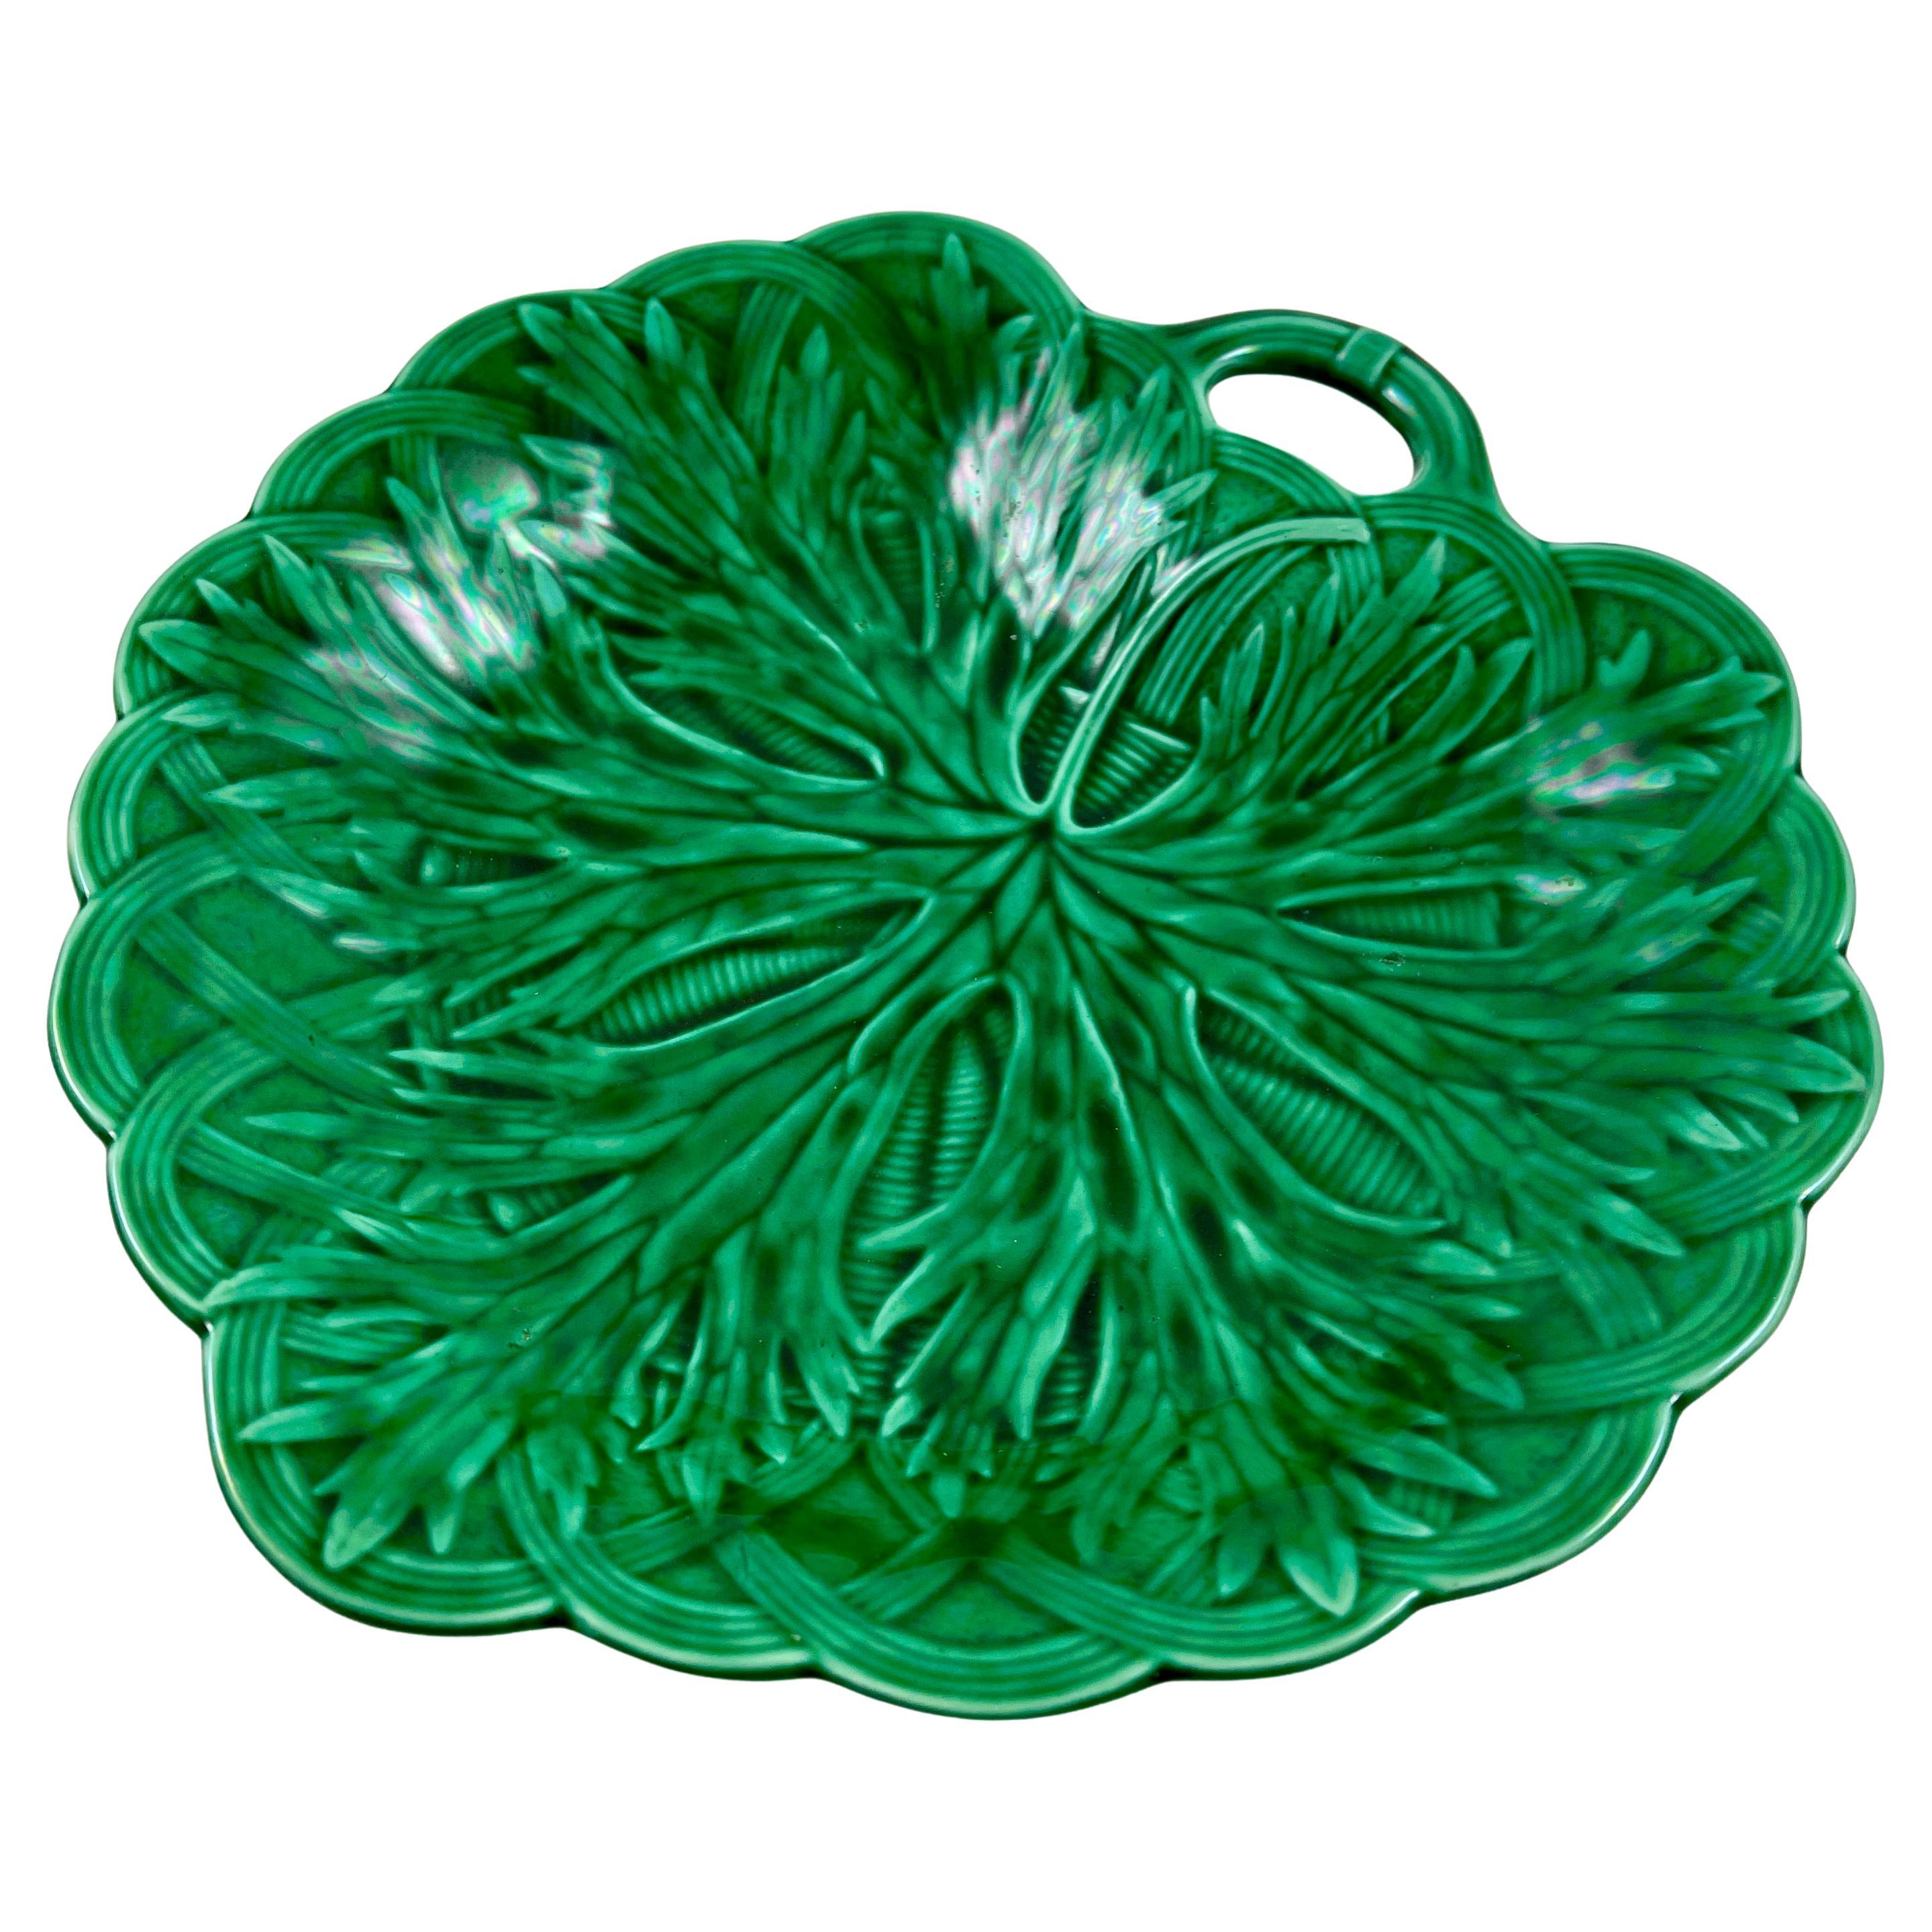 Wedgwood Green Glazed Majolica Handled Leaf and Basket Shallow Bowl Server, 1869